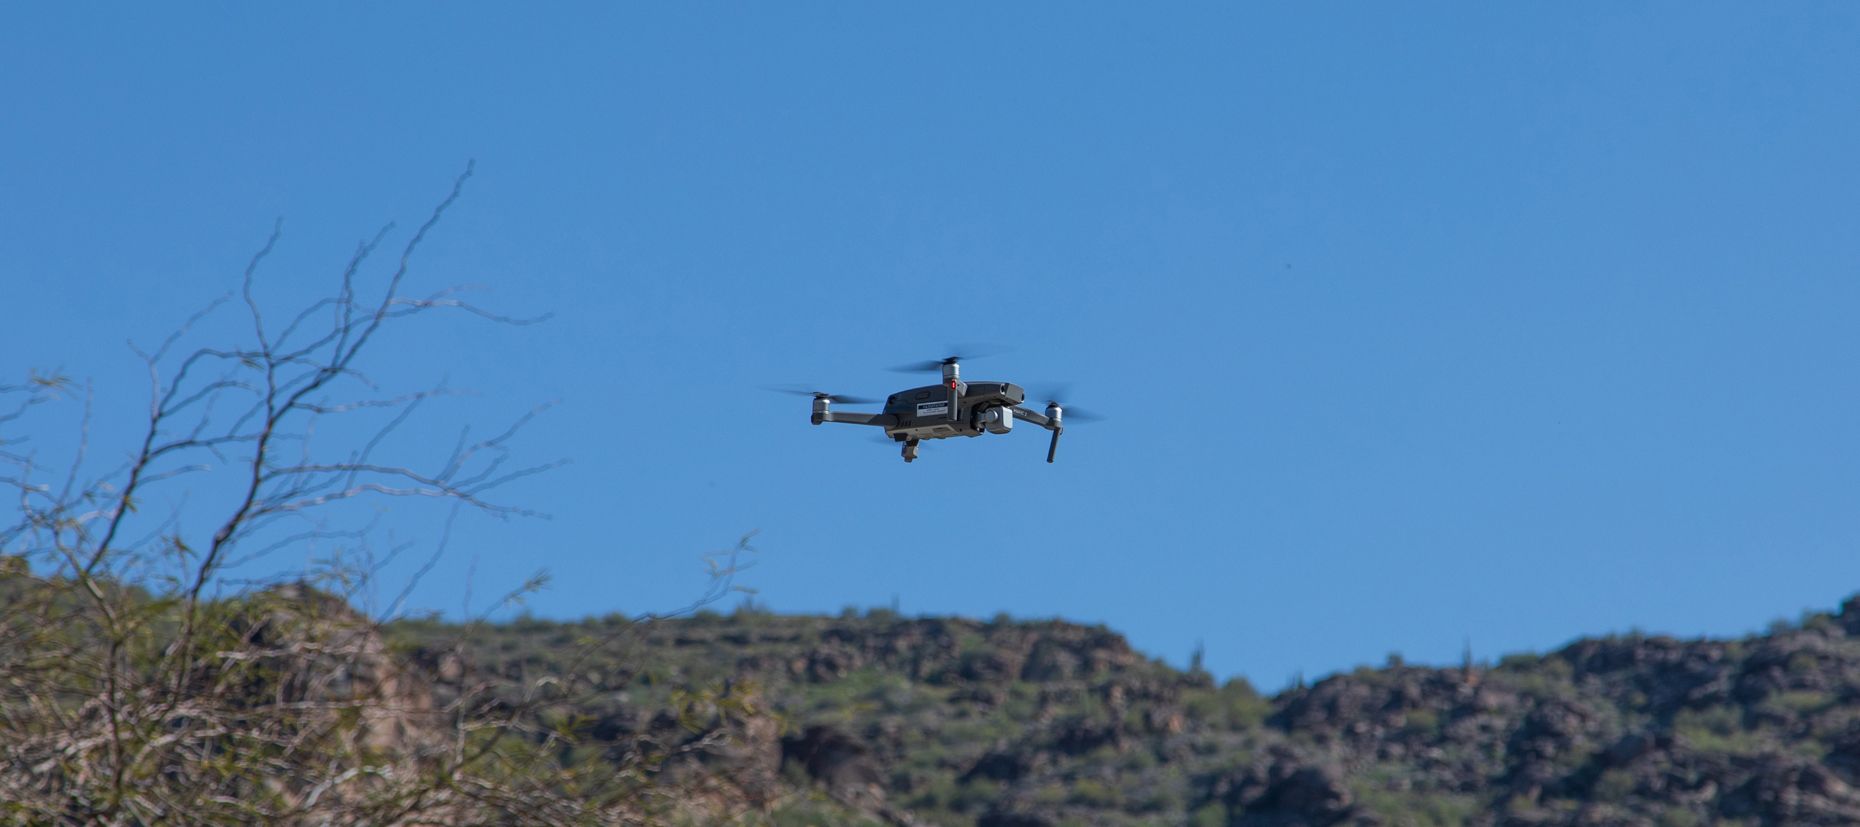 Drone S For Landscape, Drone Landscape Architecture